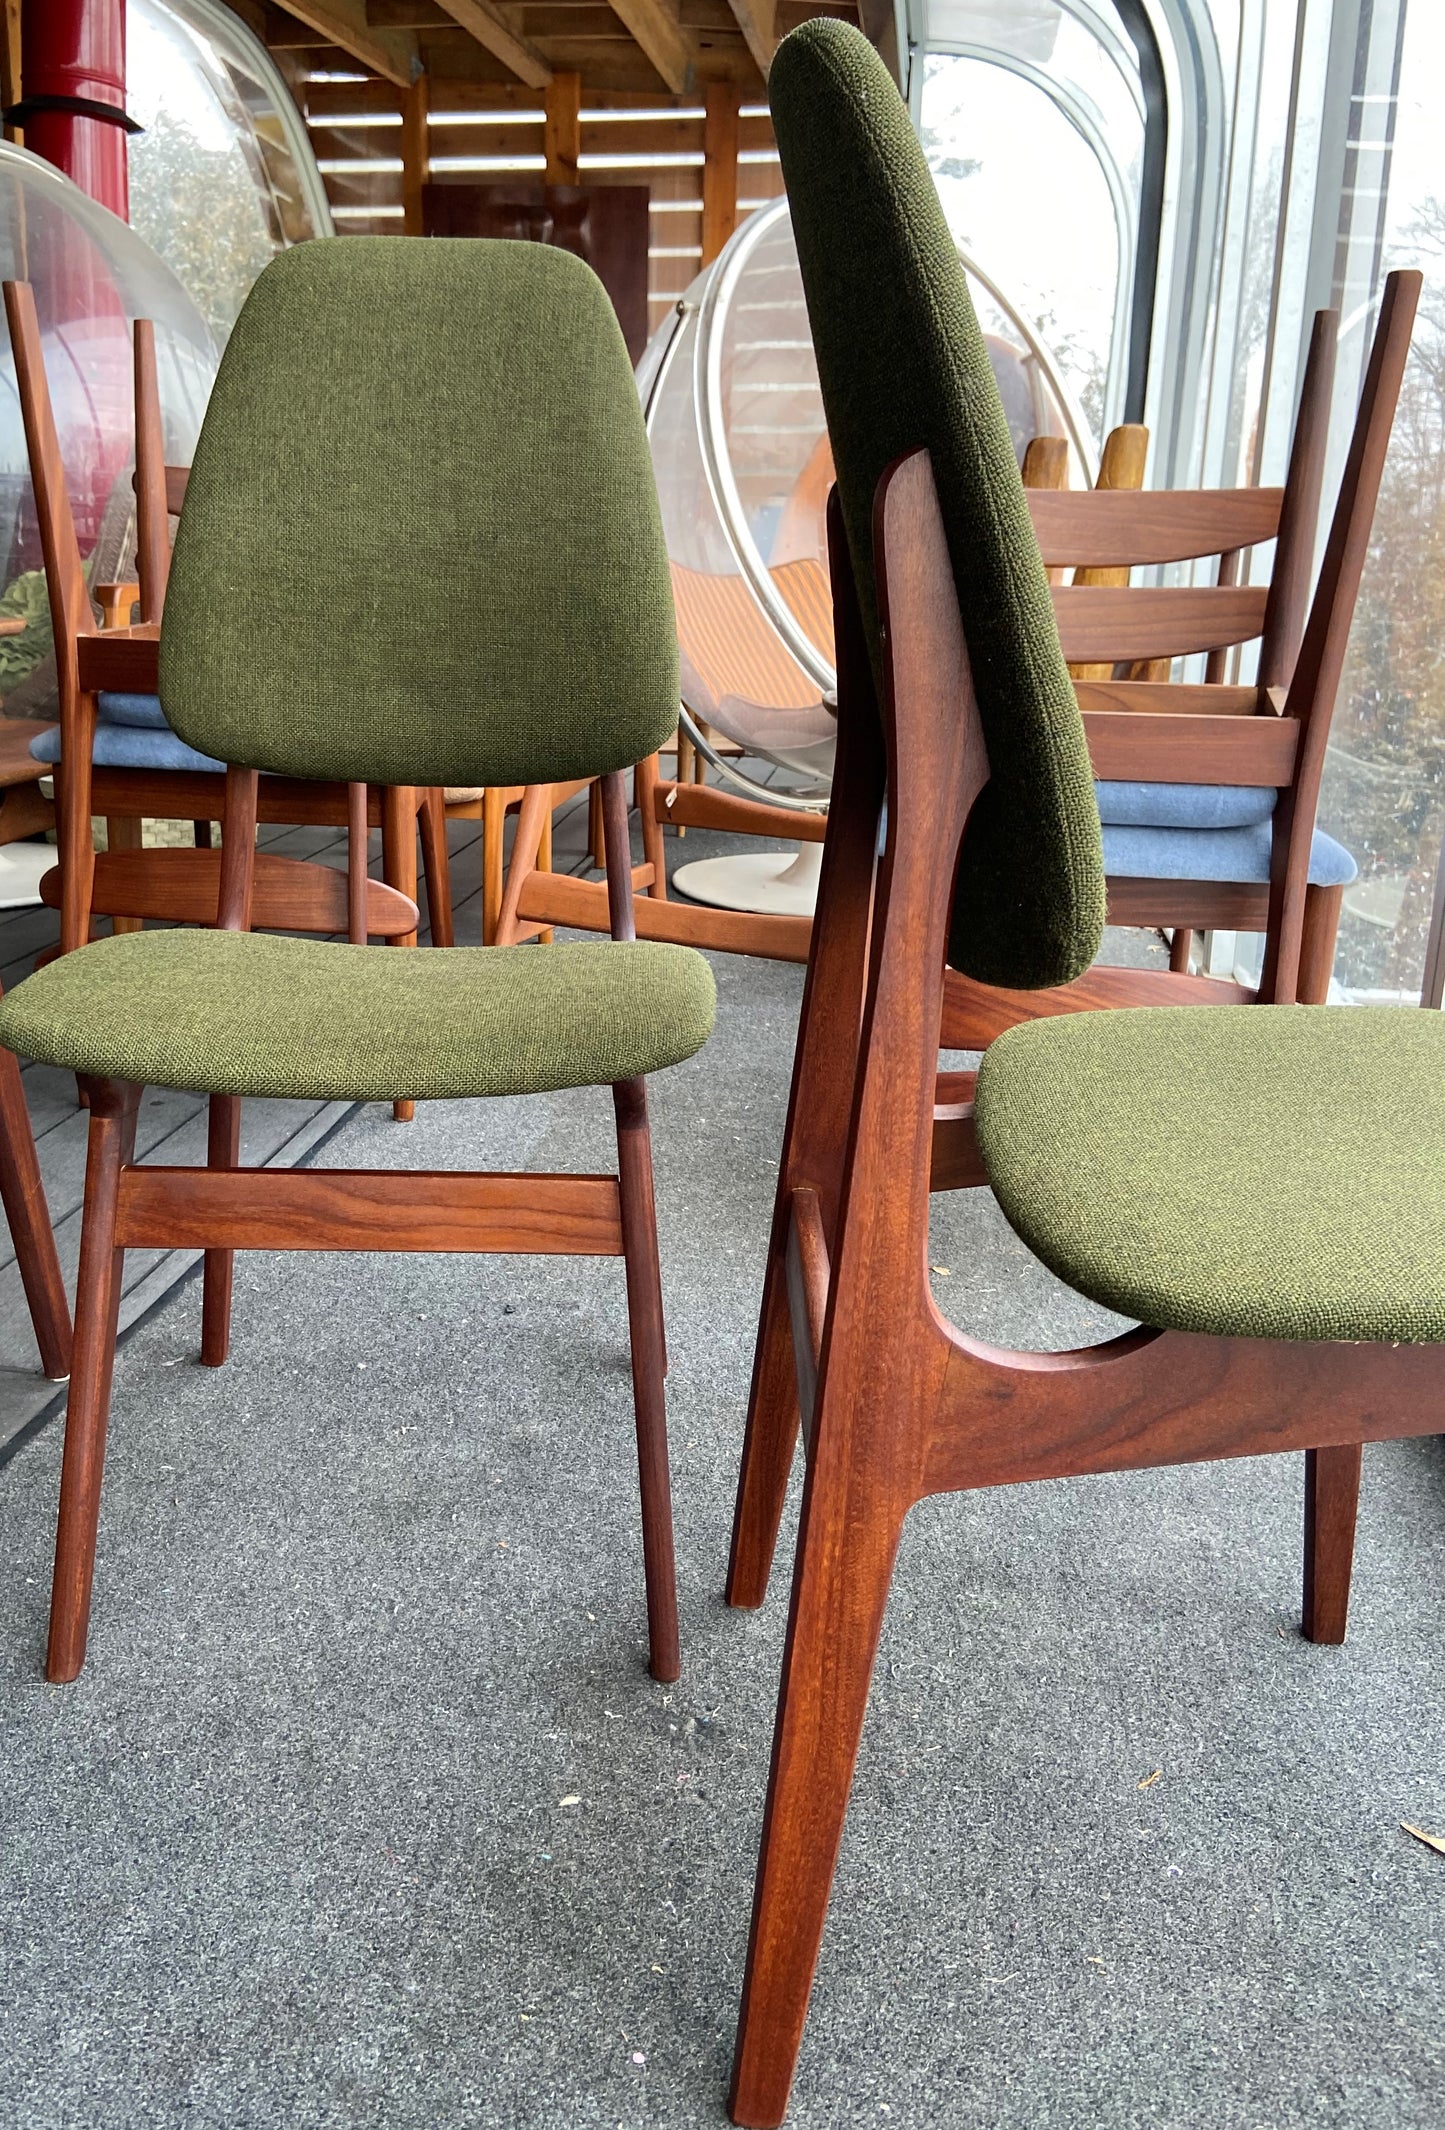 6 REFINISHED MCM Teak chairs by Brødrene Sørheim in Maharam wool upholstery, Norway, Perfect